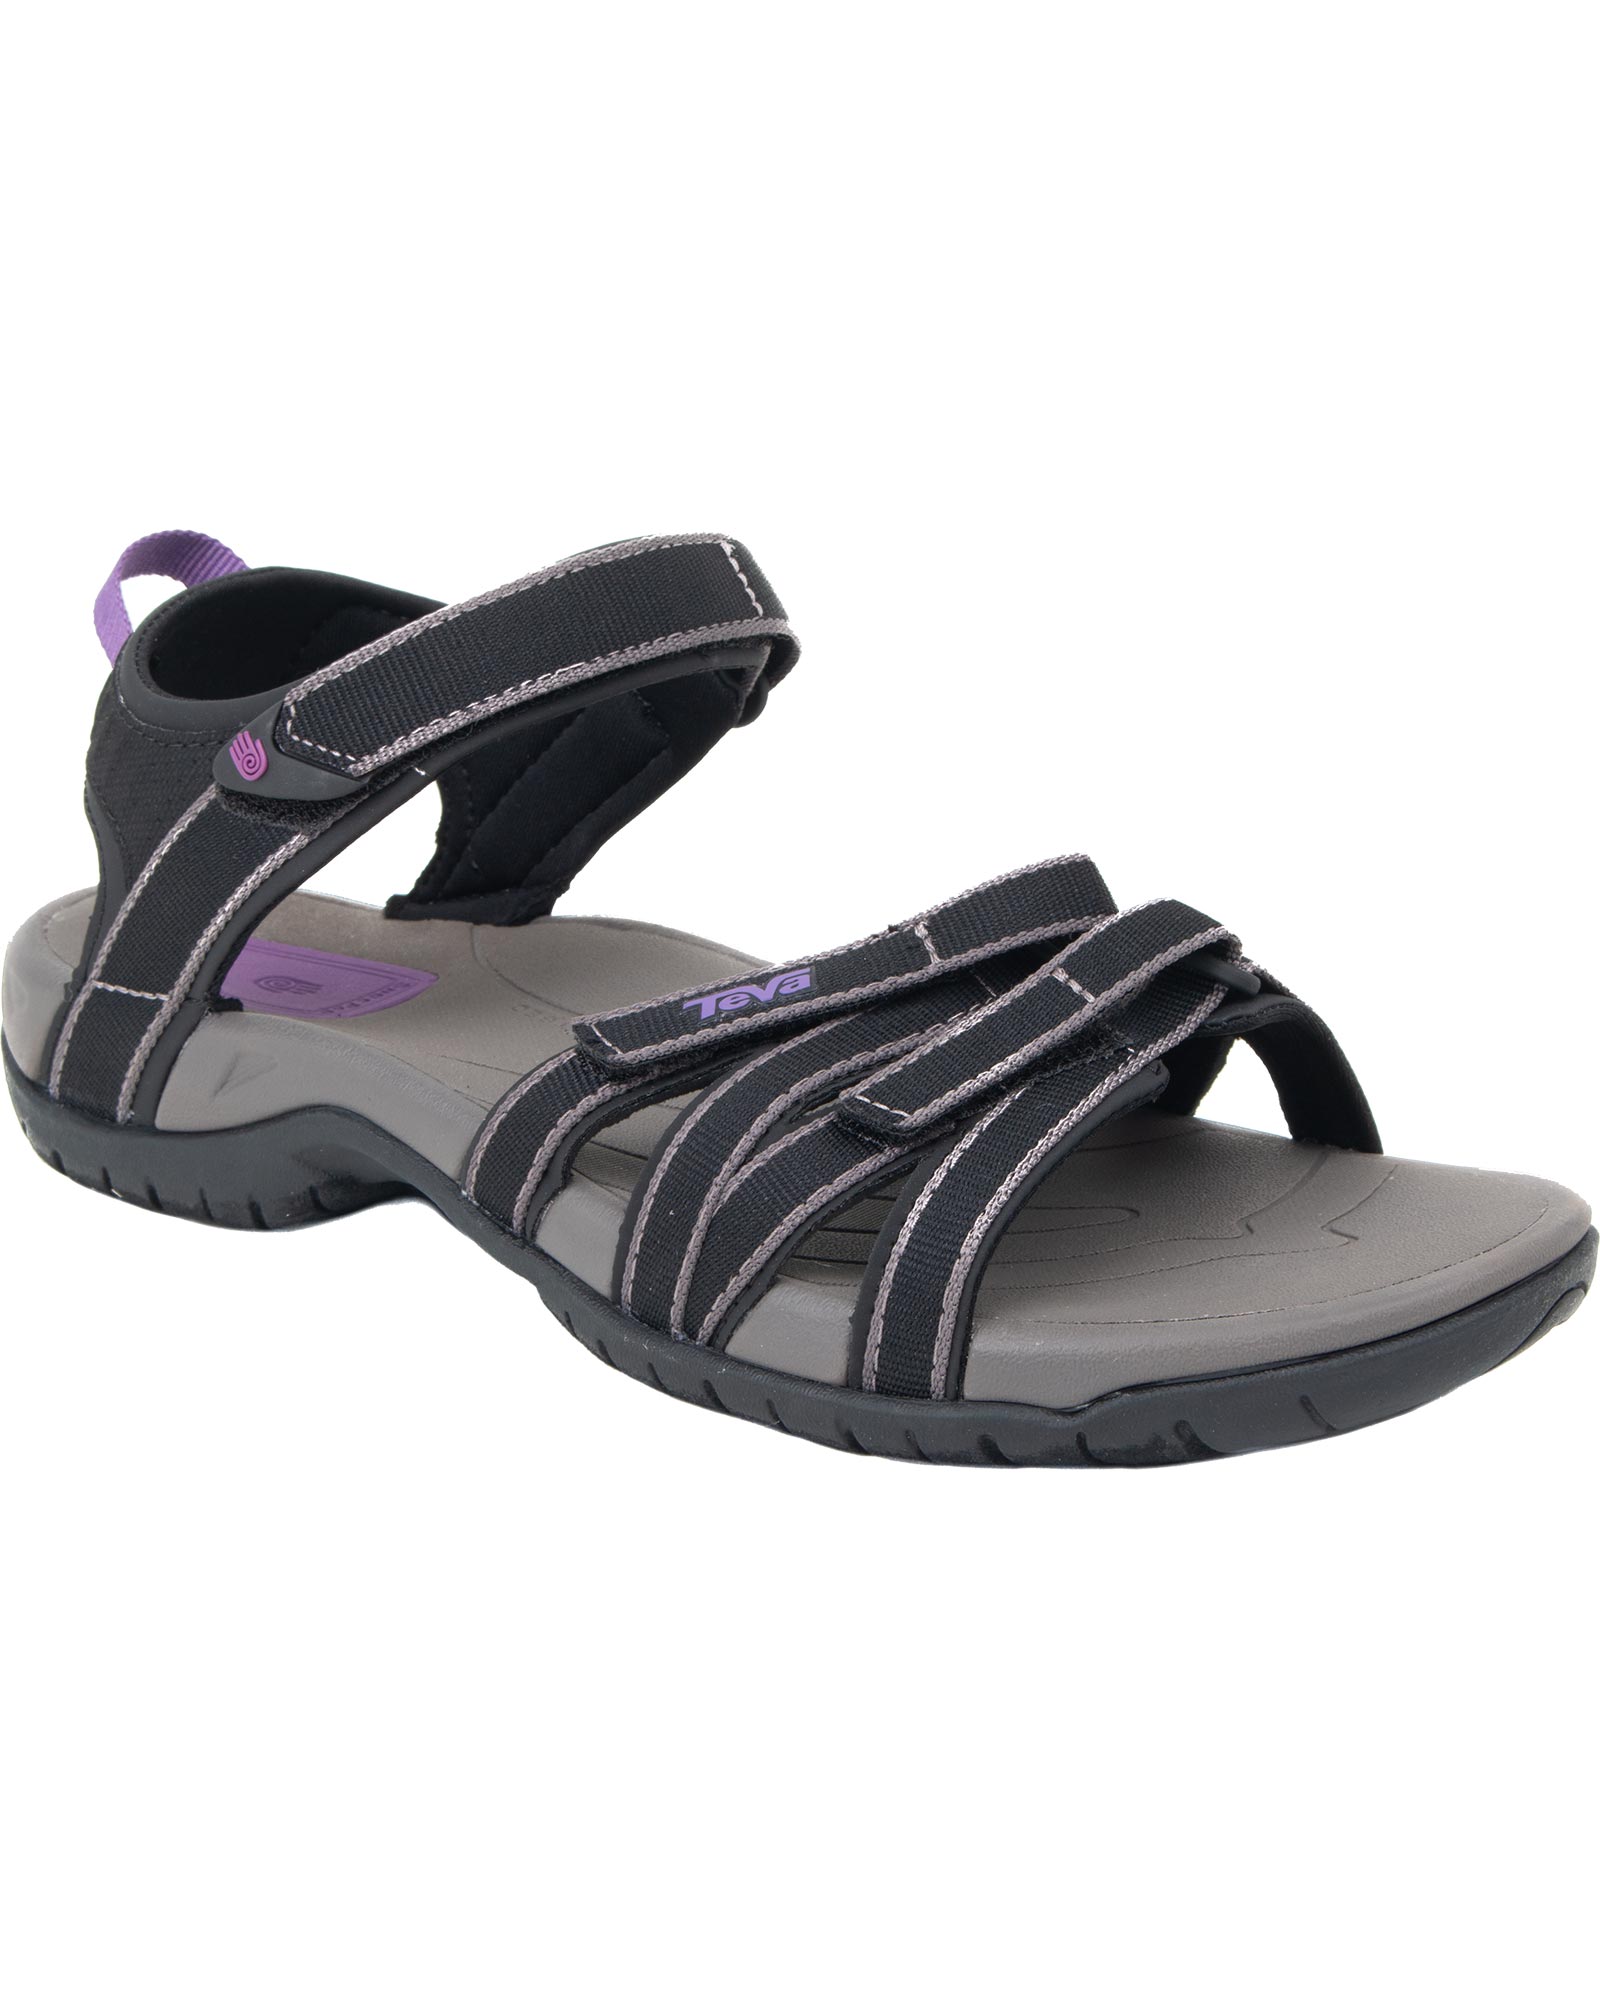 Teva Tirra Women’s Sandals - Black/Grey UK 8